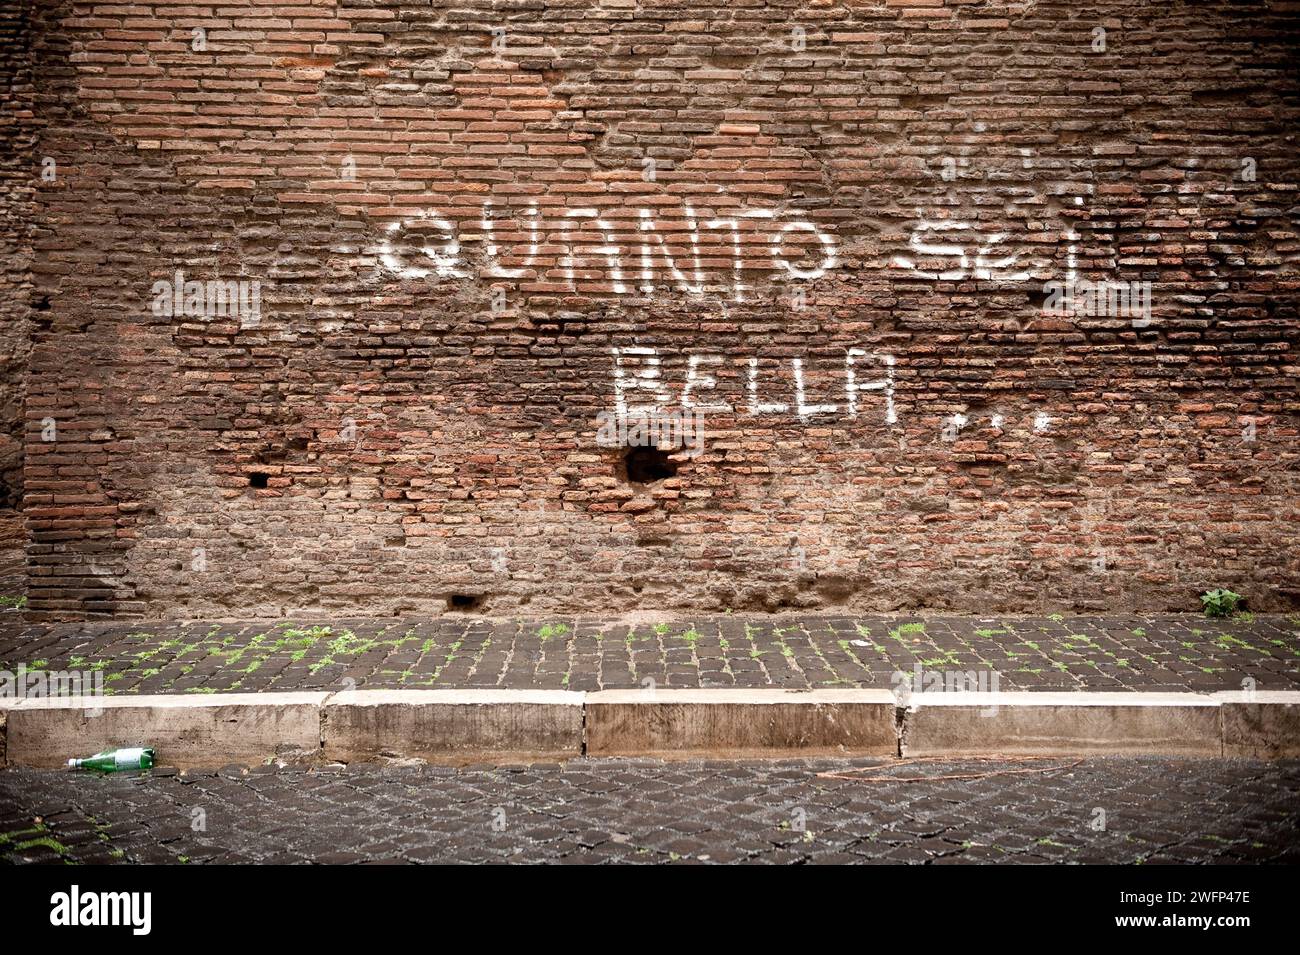 Quanto SEI Bella, comme tu es belle, Graffiti, Rome, Italie Banque D'Images